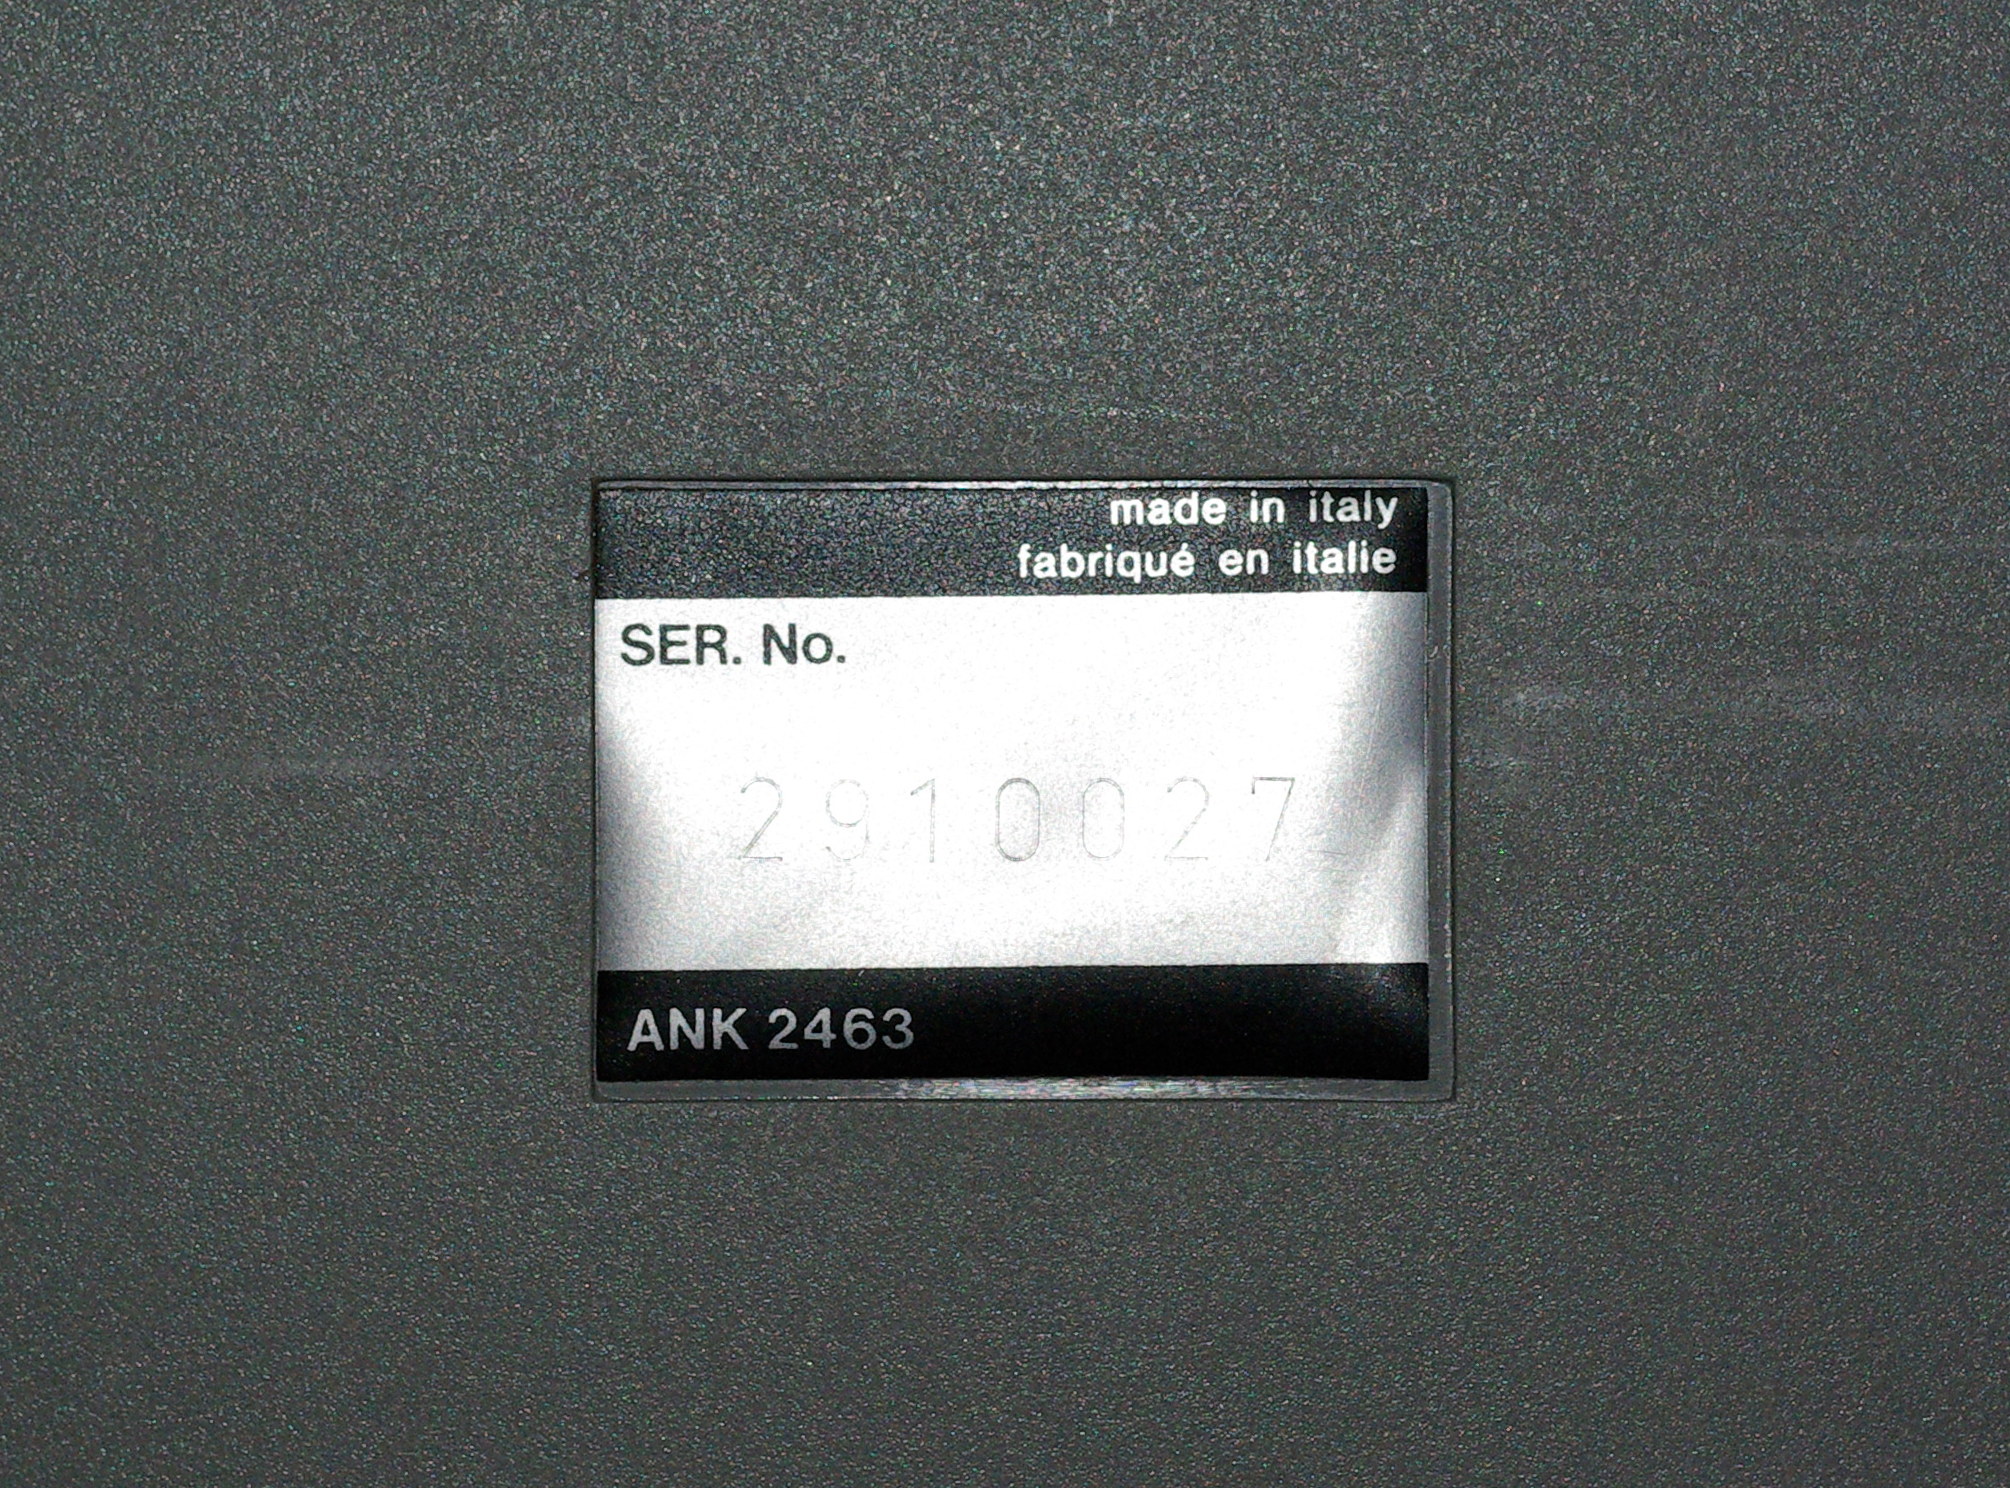 Olivetti ANK 2463 serial.JPG